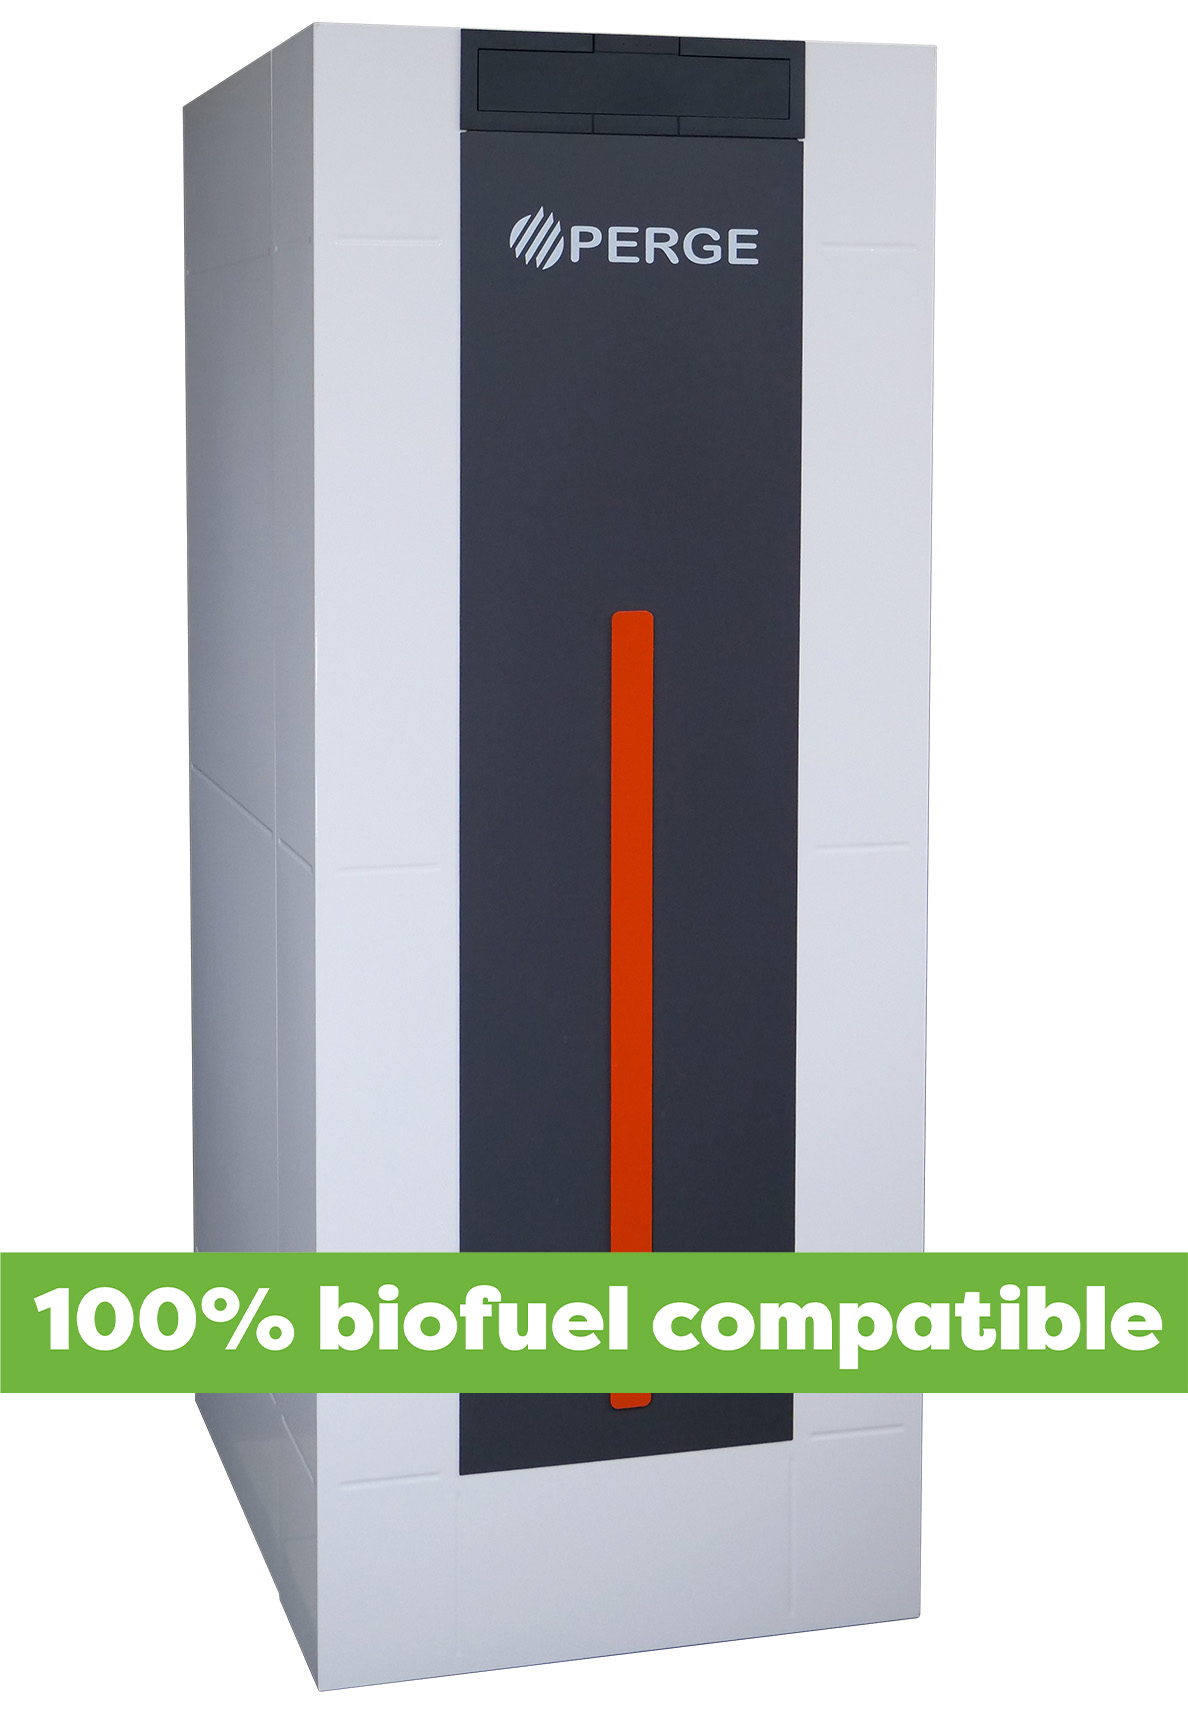 F30 medium-power biofuel boilers